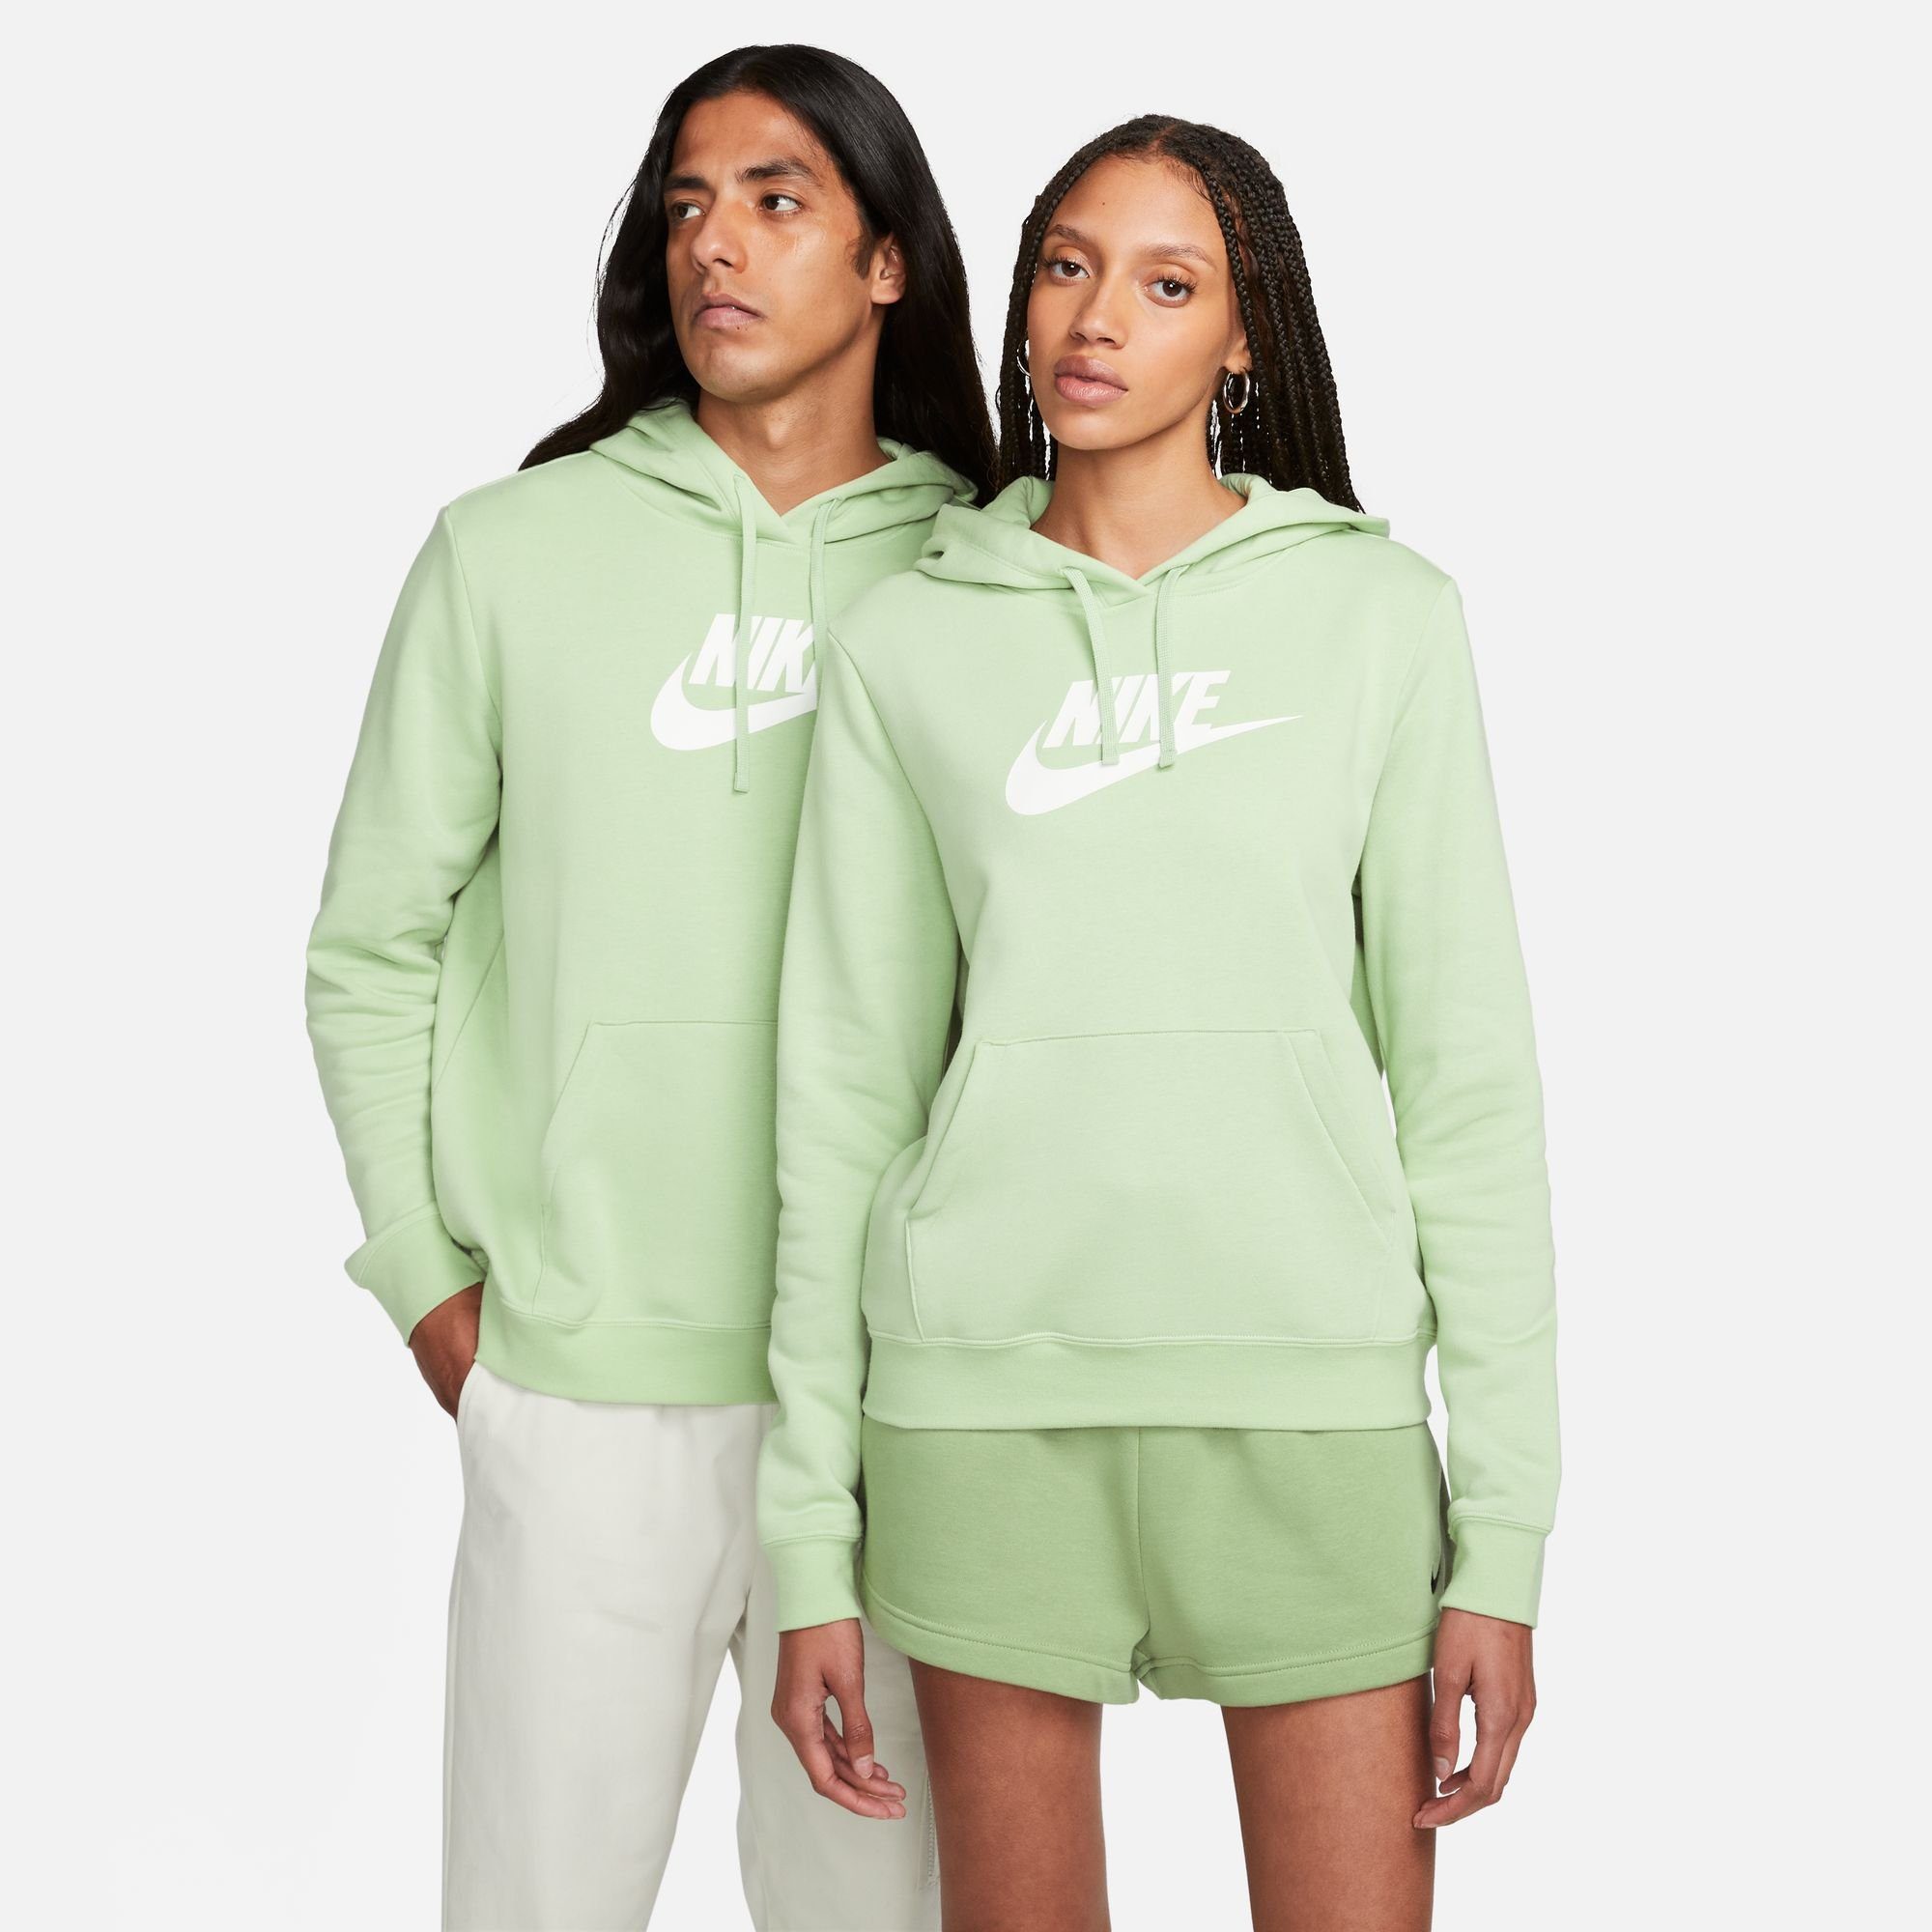 HONEYDEW/WHITE Women's Logo Nike Kapuzensweatshirt Pullover Fleece Sportswear Club Hoodie